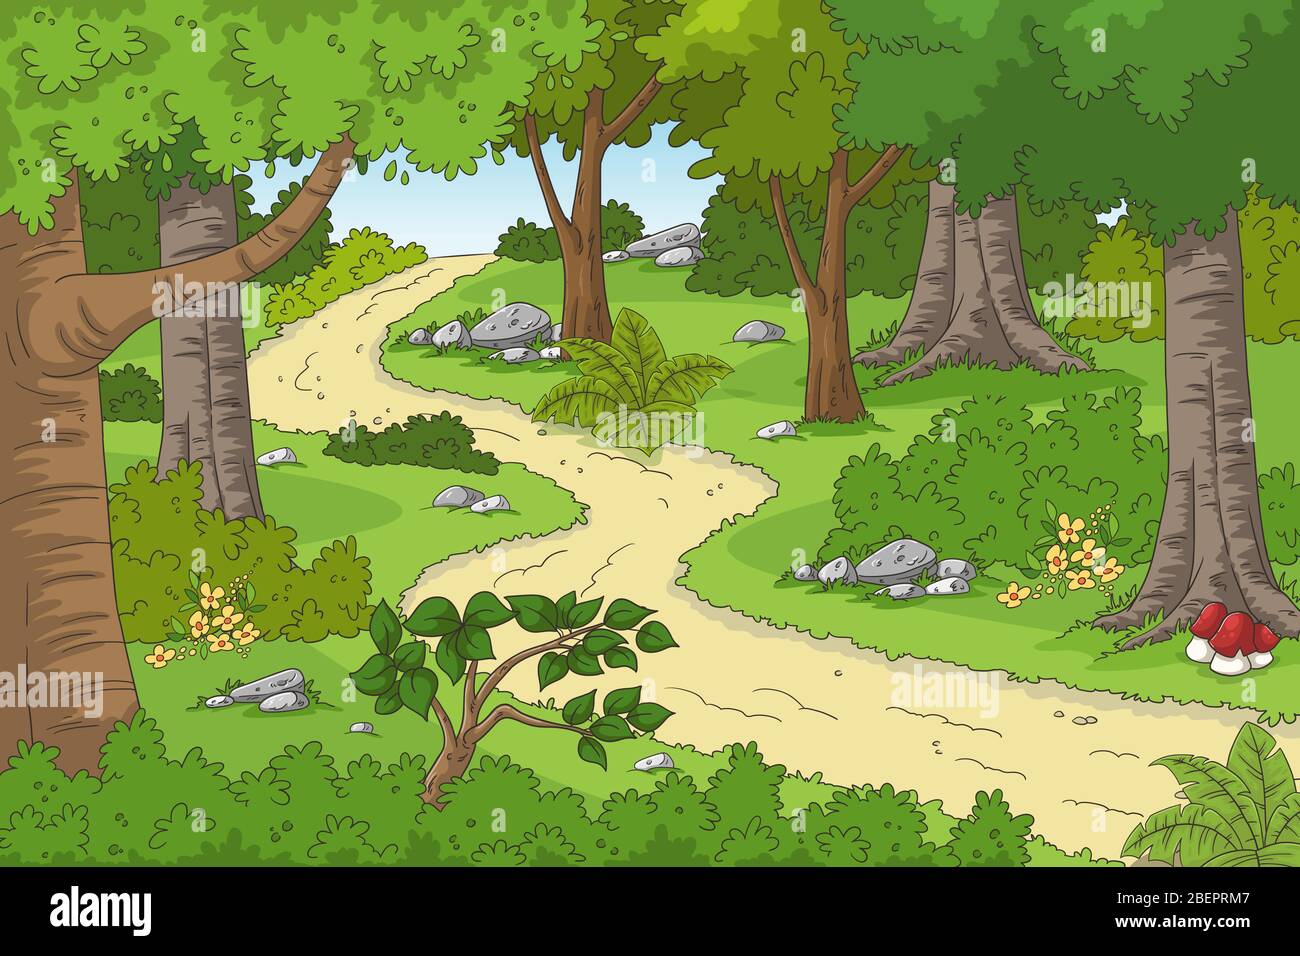 Paisaje de bosque de dibujos animados con sendero para caminatas.  Ilustración vectorial dibujada a mano con capas separadas Imagen Vector de  stock - Alamy